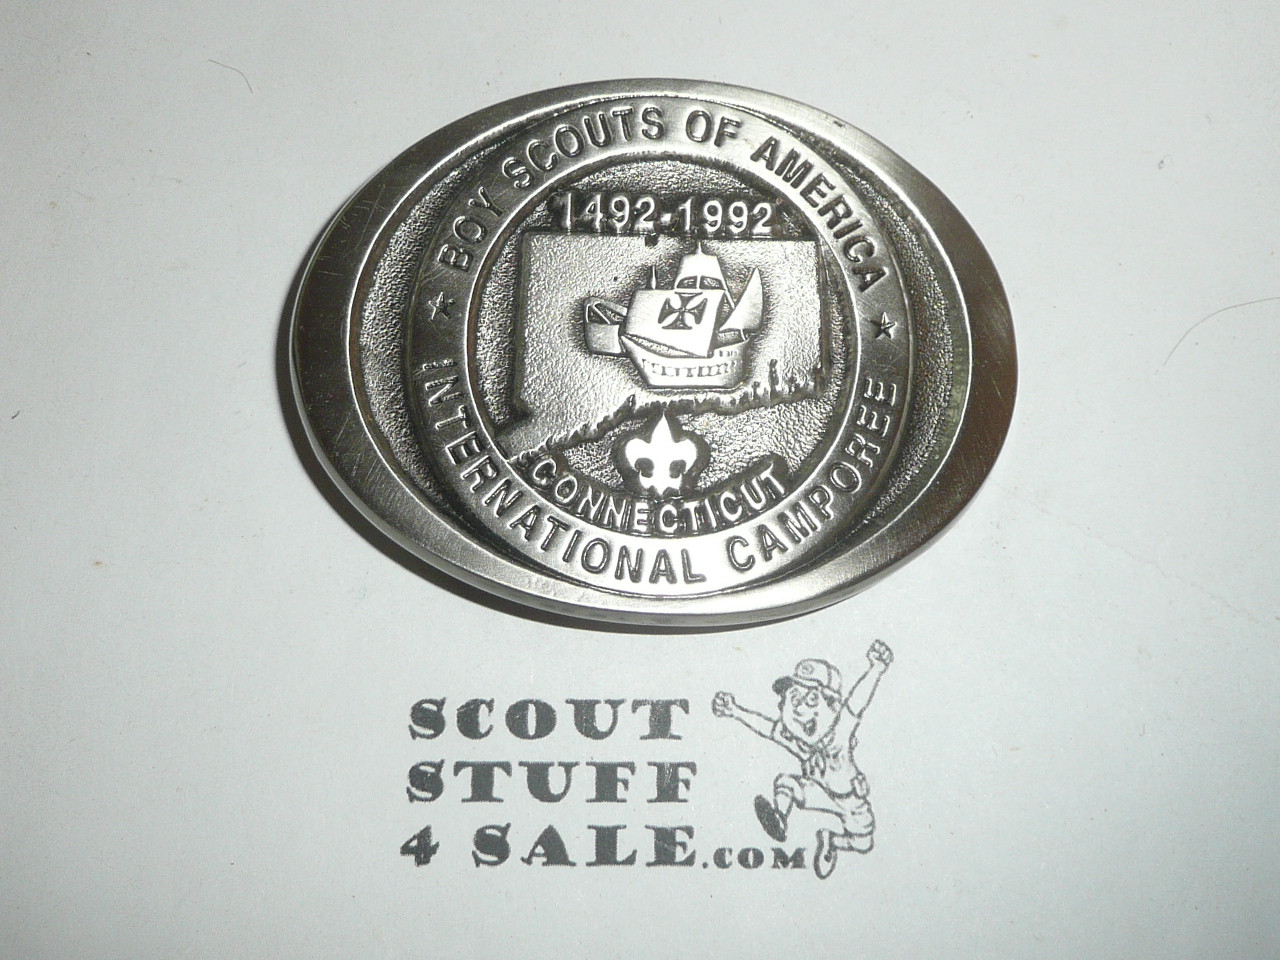 Boy Scout of America International Jamboree Belt Buckle, Conneticut, 1992